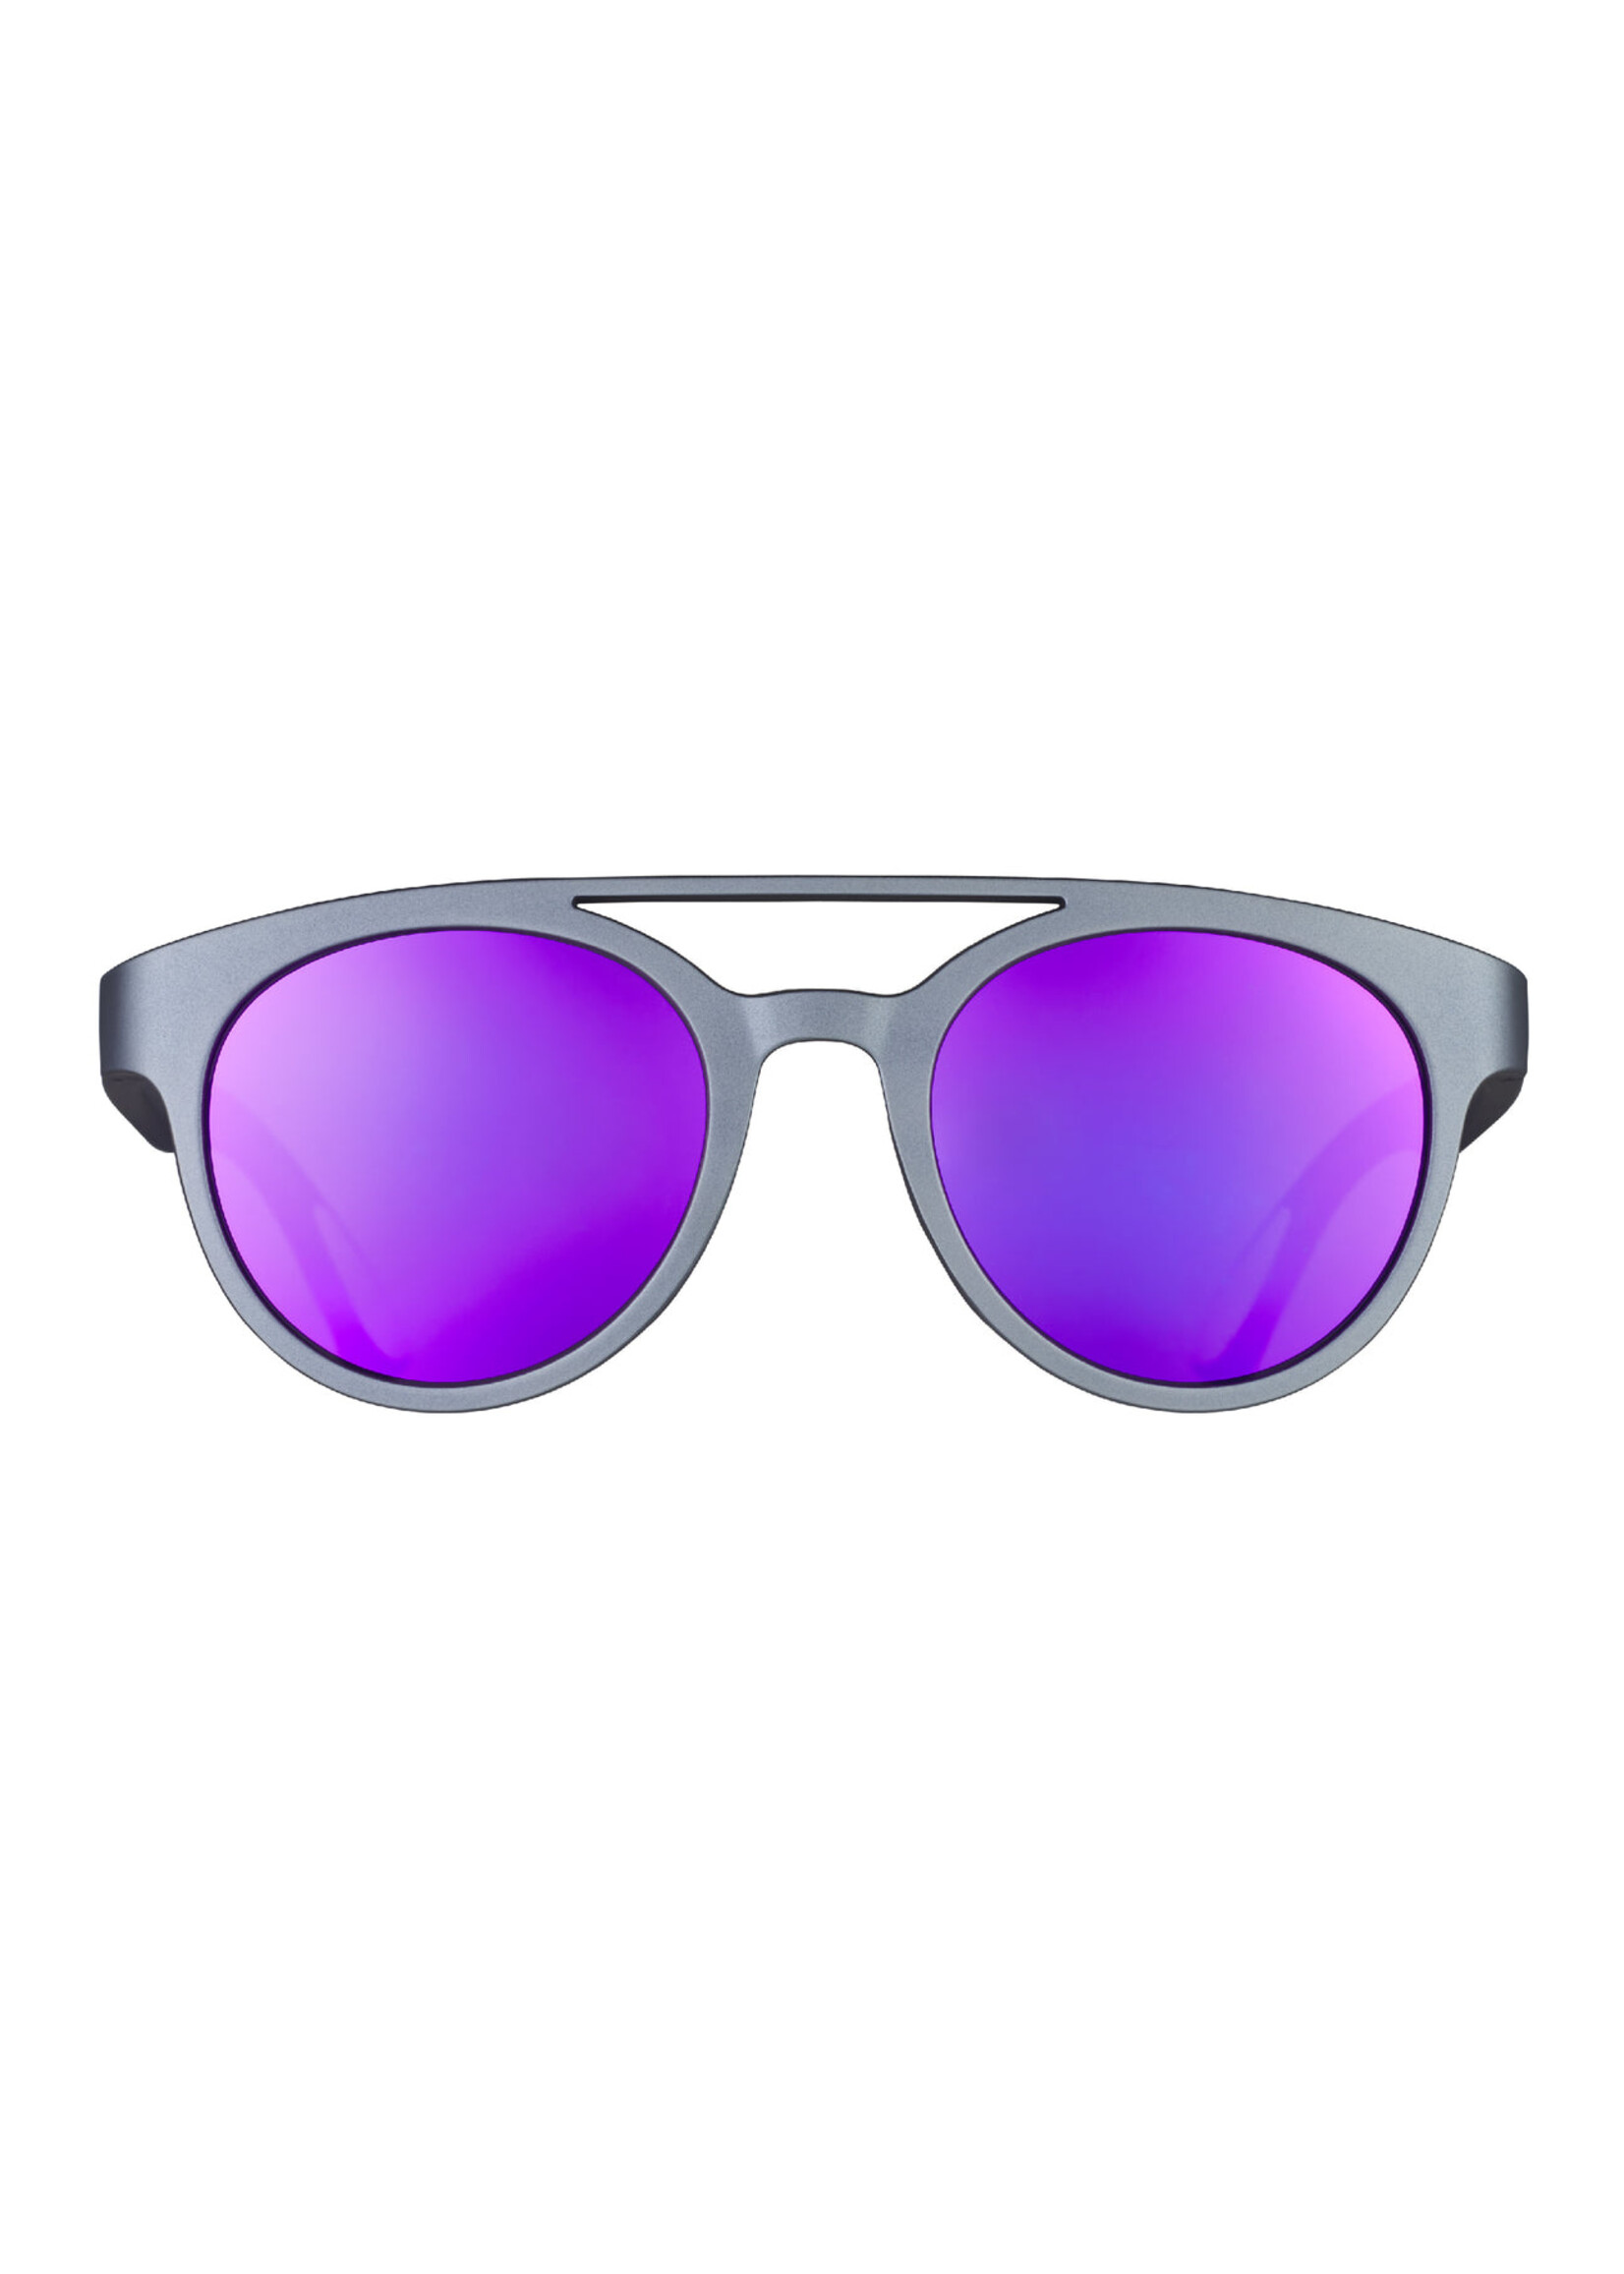 Goodr PHG Sunglasses - The New Prospector